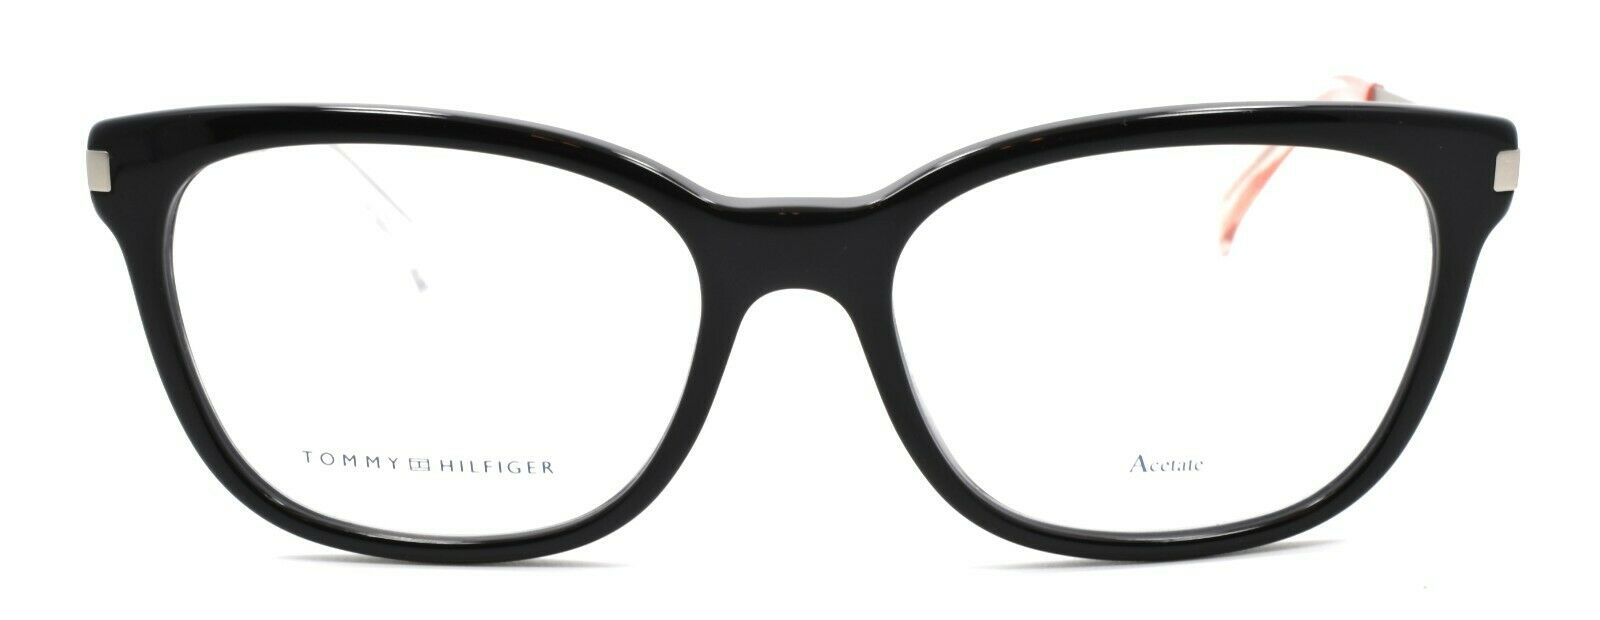 2-TOMMY HILFIGER TH 1381 FB8 Women's Eyeglasses Frames 53-17-140 Black / Palladium-762753621153-IKSpecs